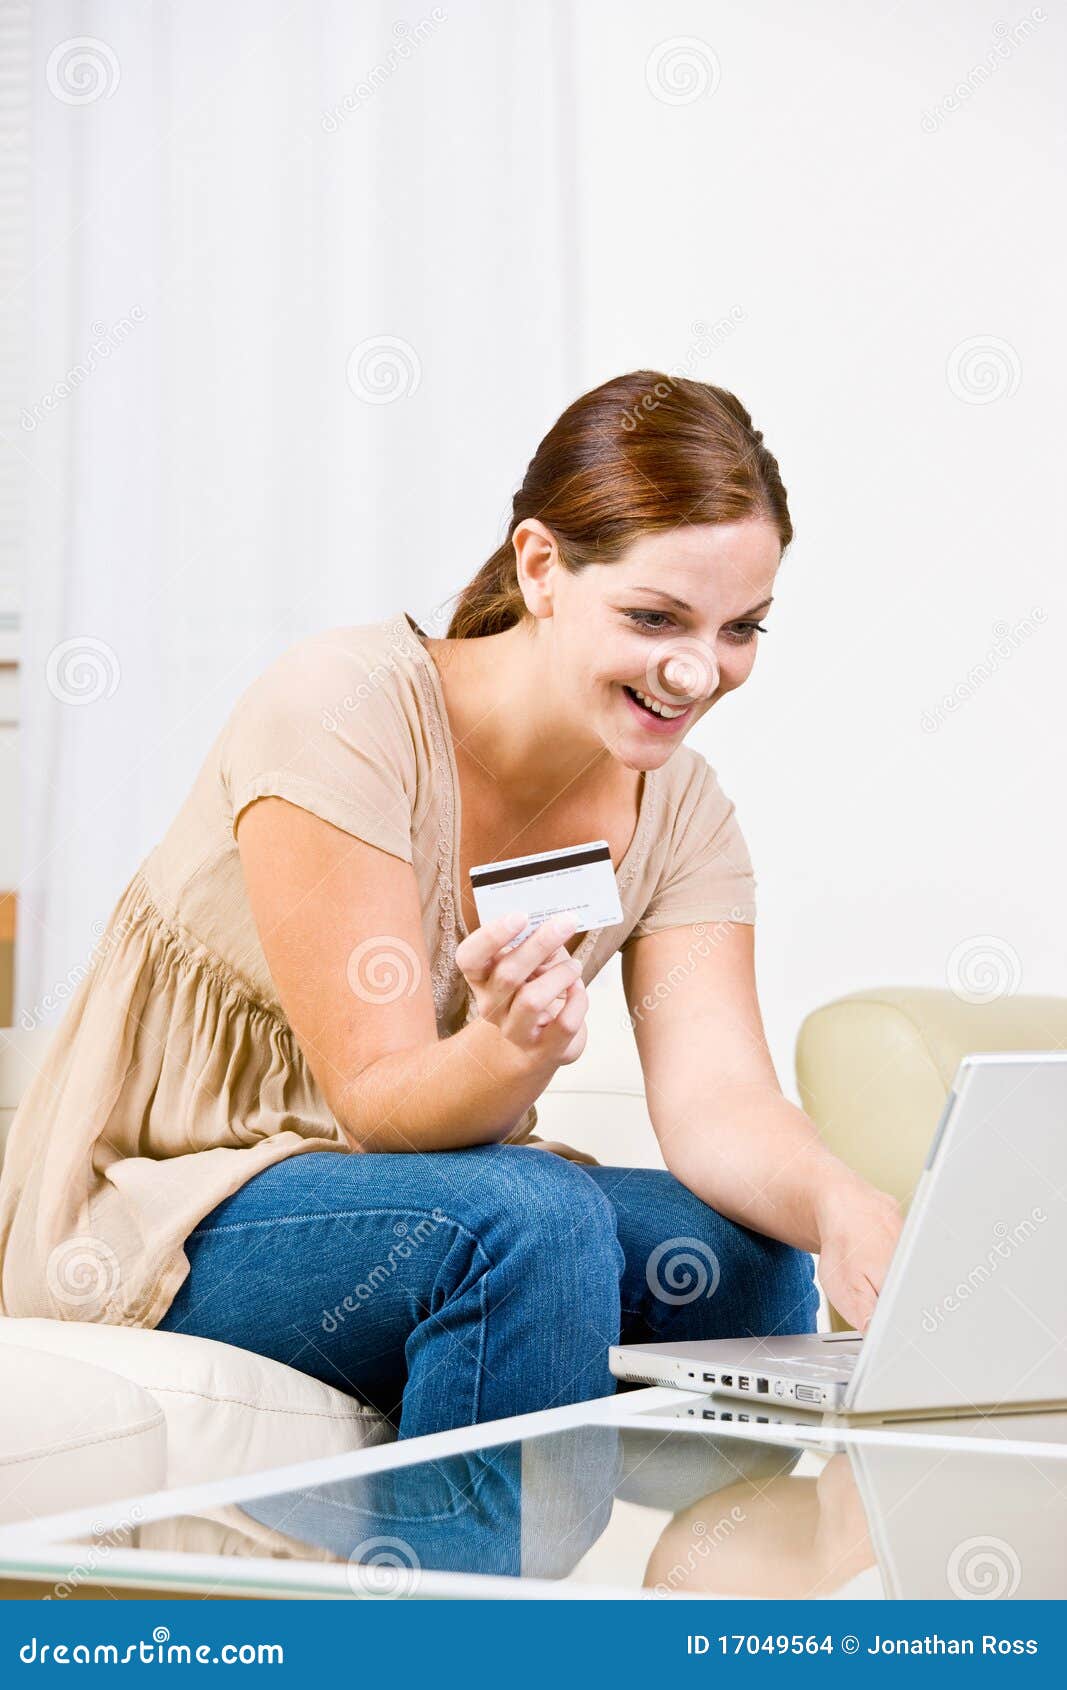 woman using creditcard to buy internet merchandise